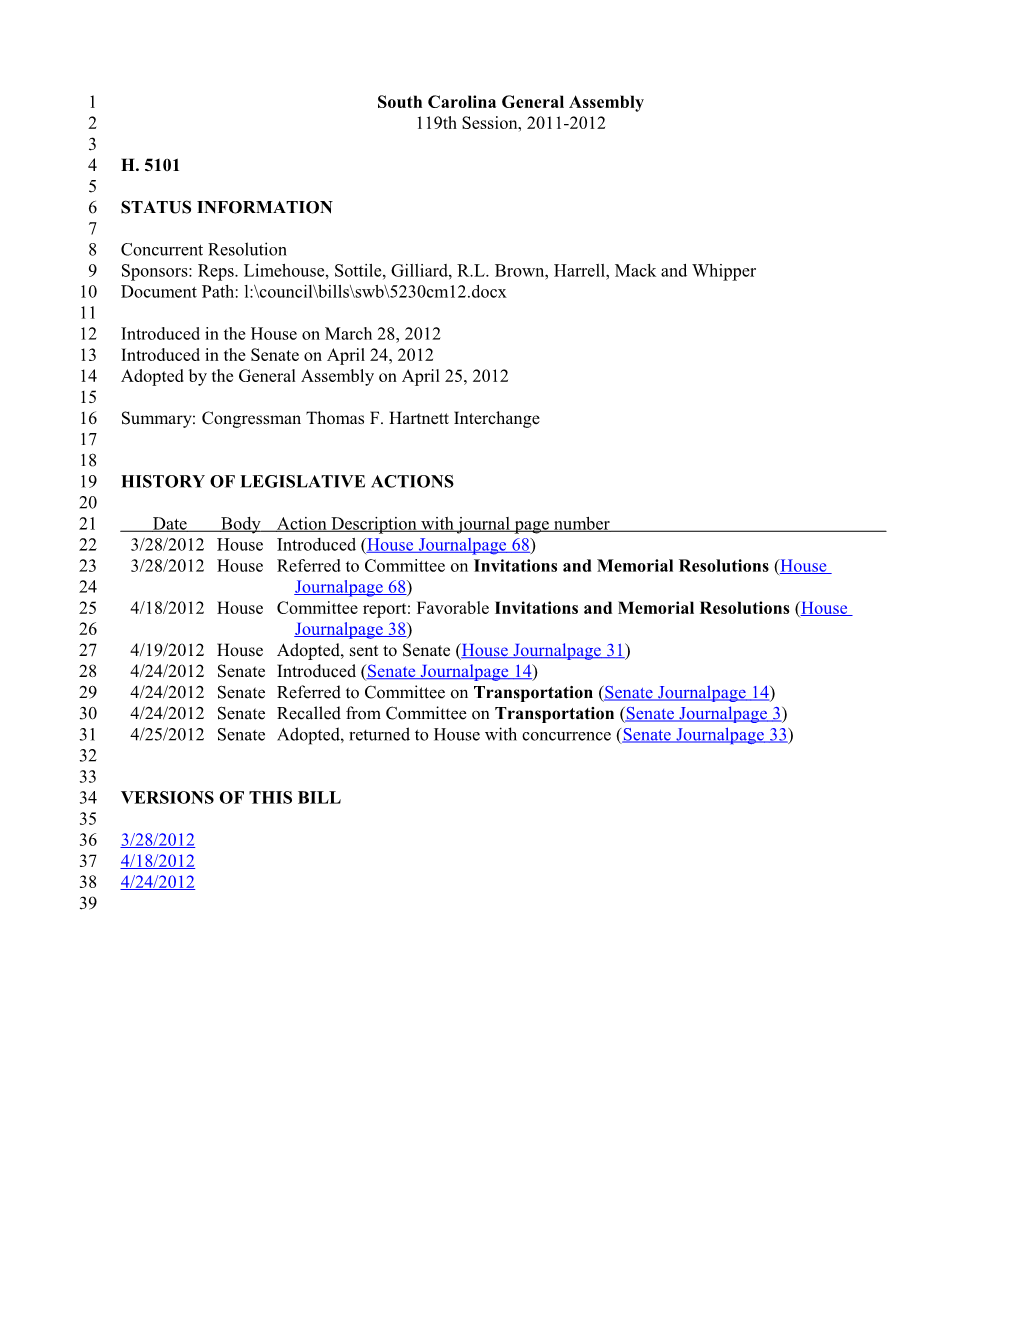 2011-2012 Bill 5101: Congressman Thomas F. Hartnett Interchange - South Carolina Legislature